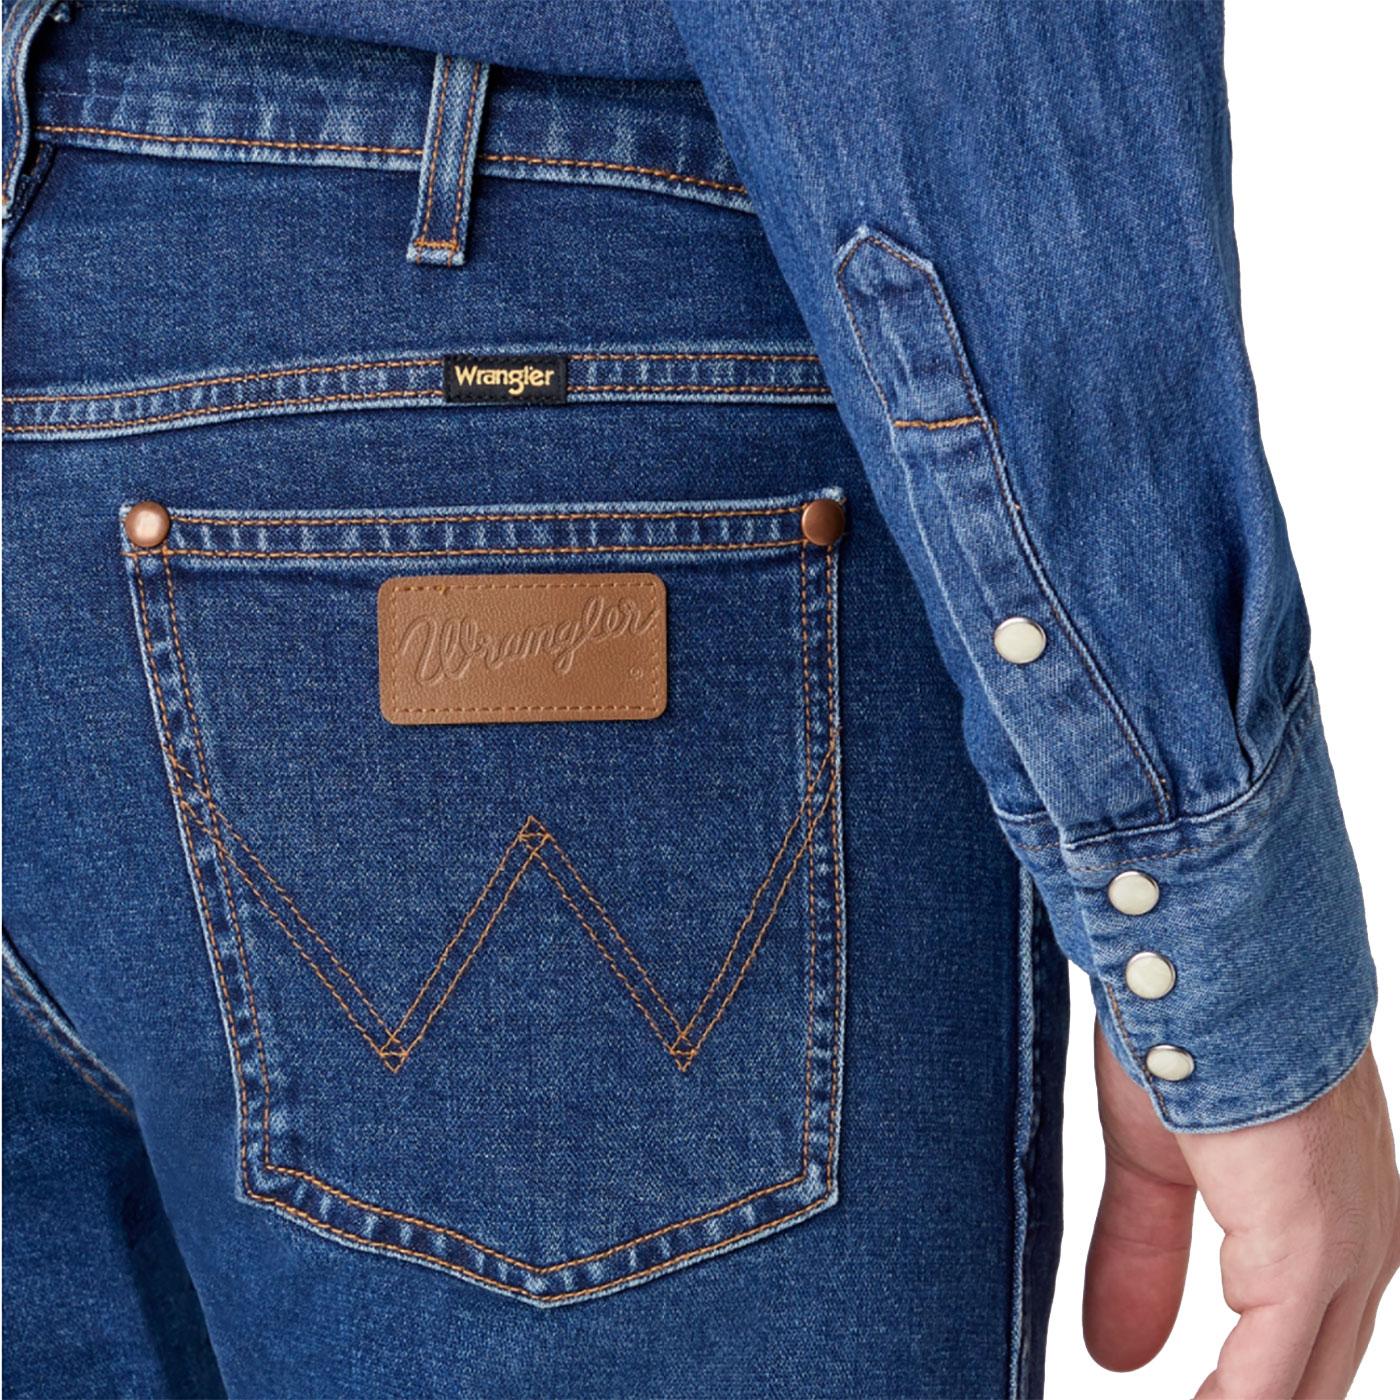 WRANGLER '11MWZ' Slim Western Jeans in 6 Month Wash